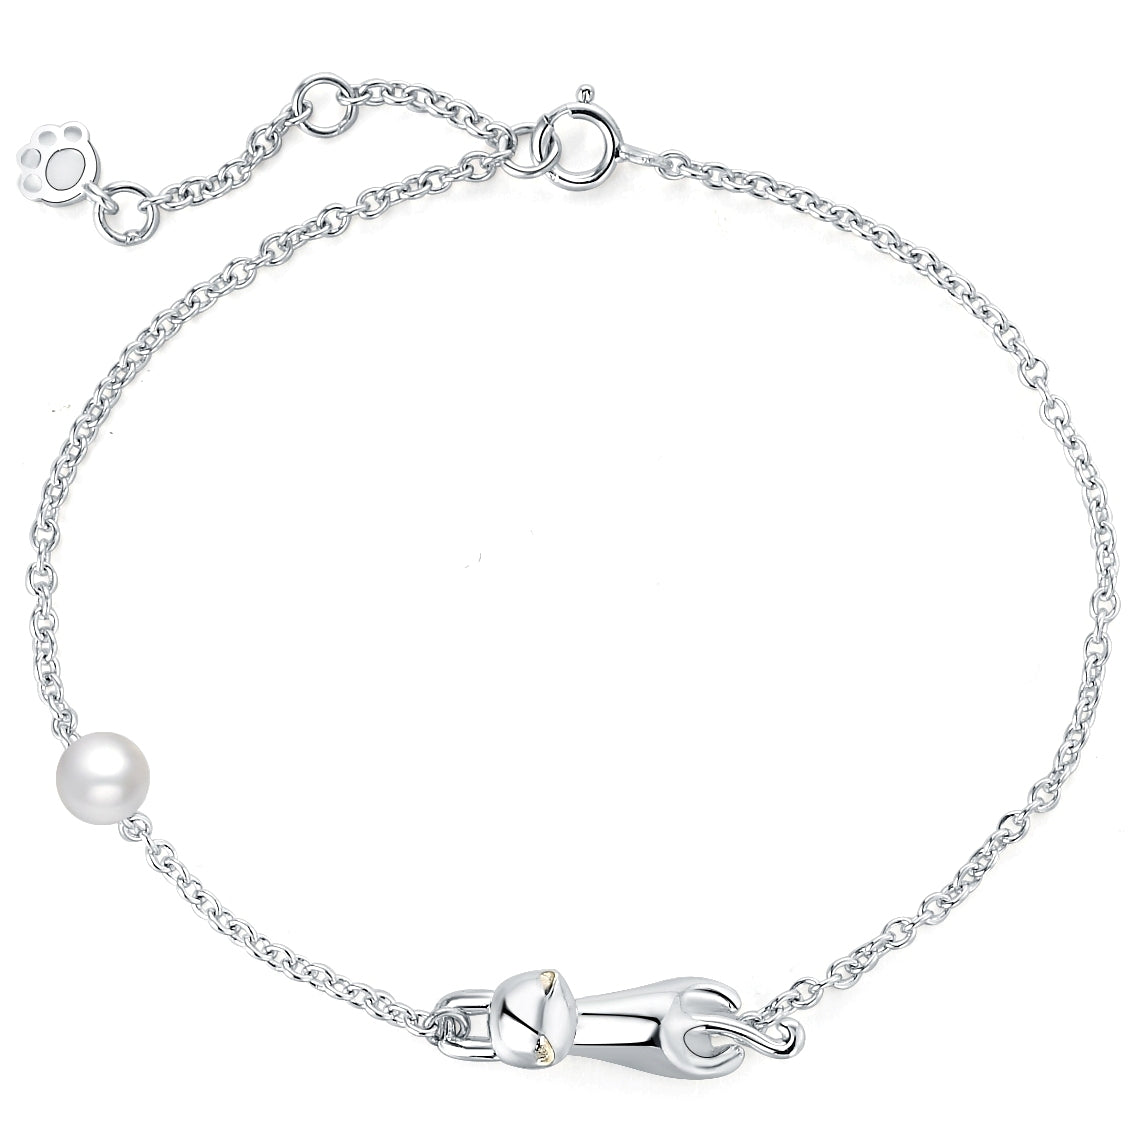 Buy Sterling Silver Bracelet for Women Handmade Chain Retro Style, Dainty  Jewelry Geometric Shape Daily Wear Online in India - Etsy